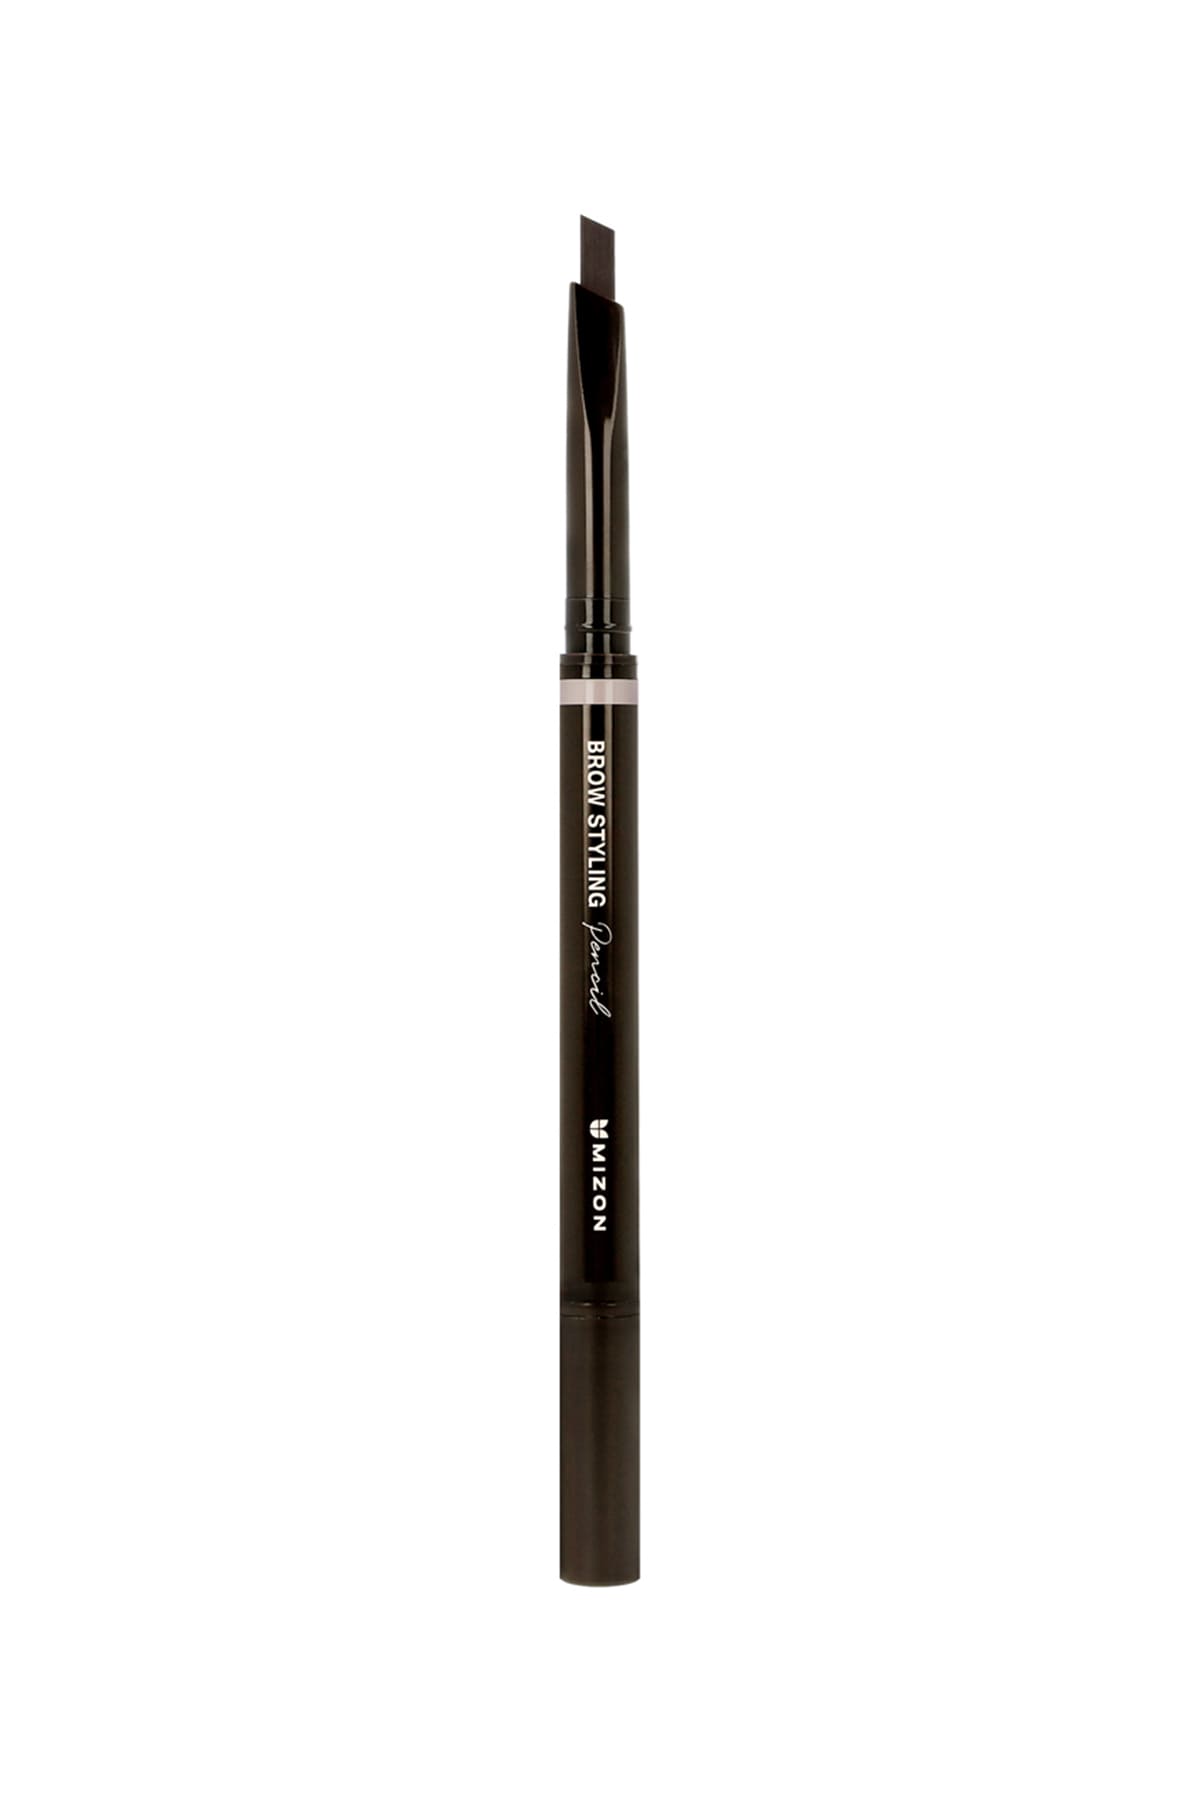 Mizon Brow Styling Pencil #Gray Brown 0.35g - Doğal Kaş Kalemi #Gri Kahve